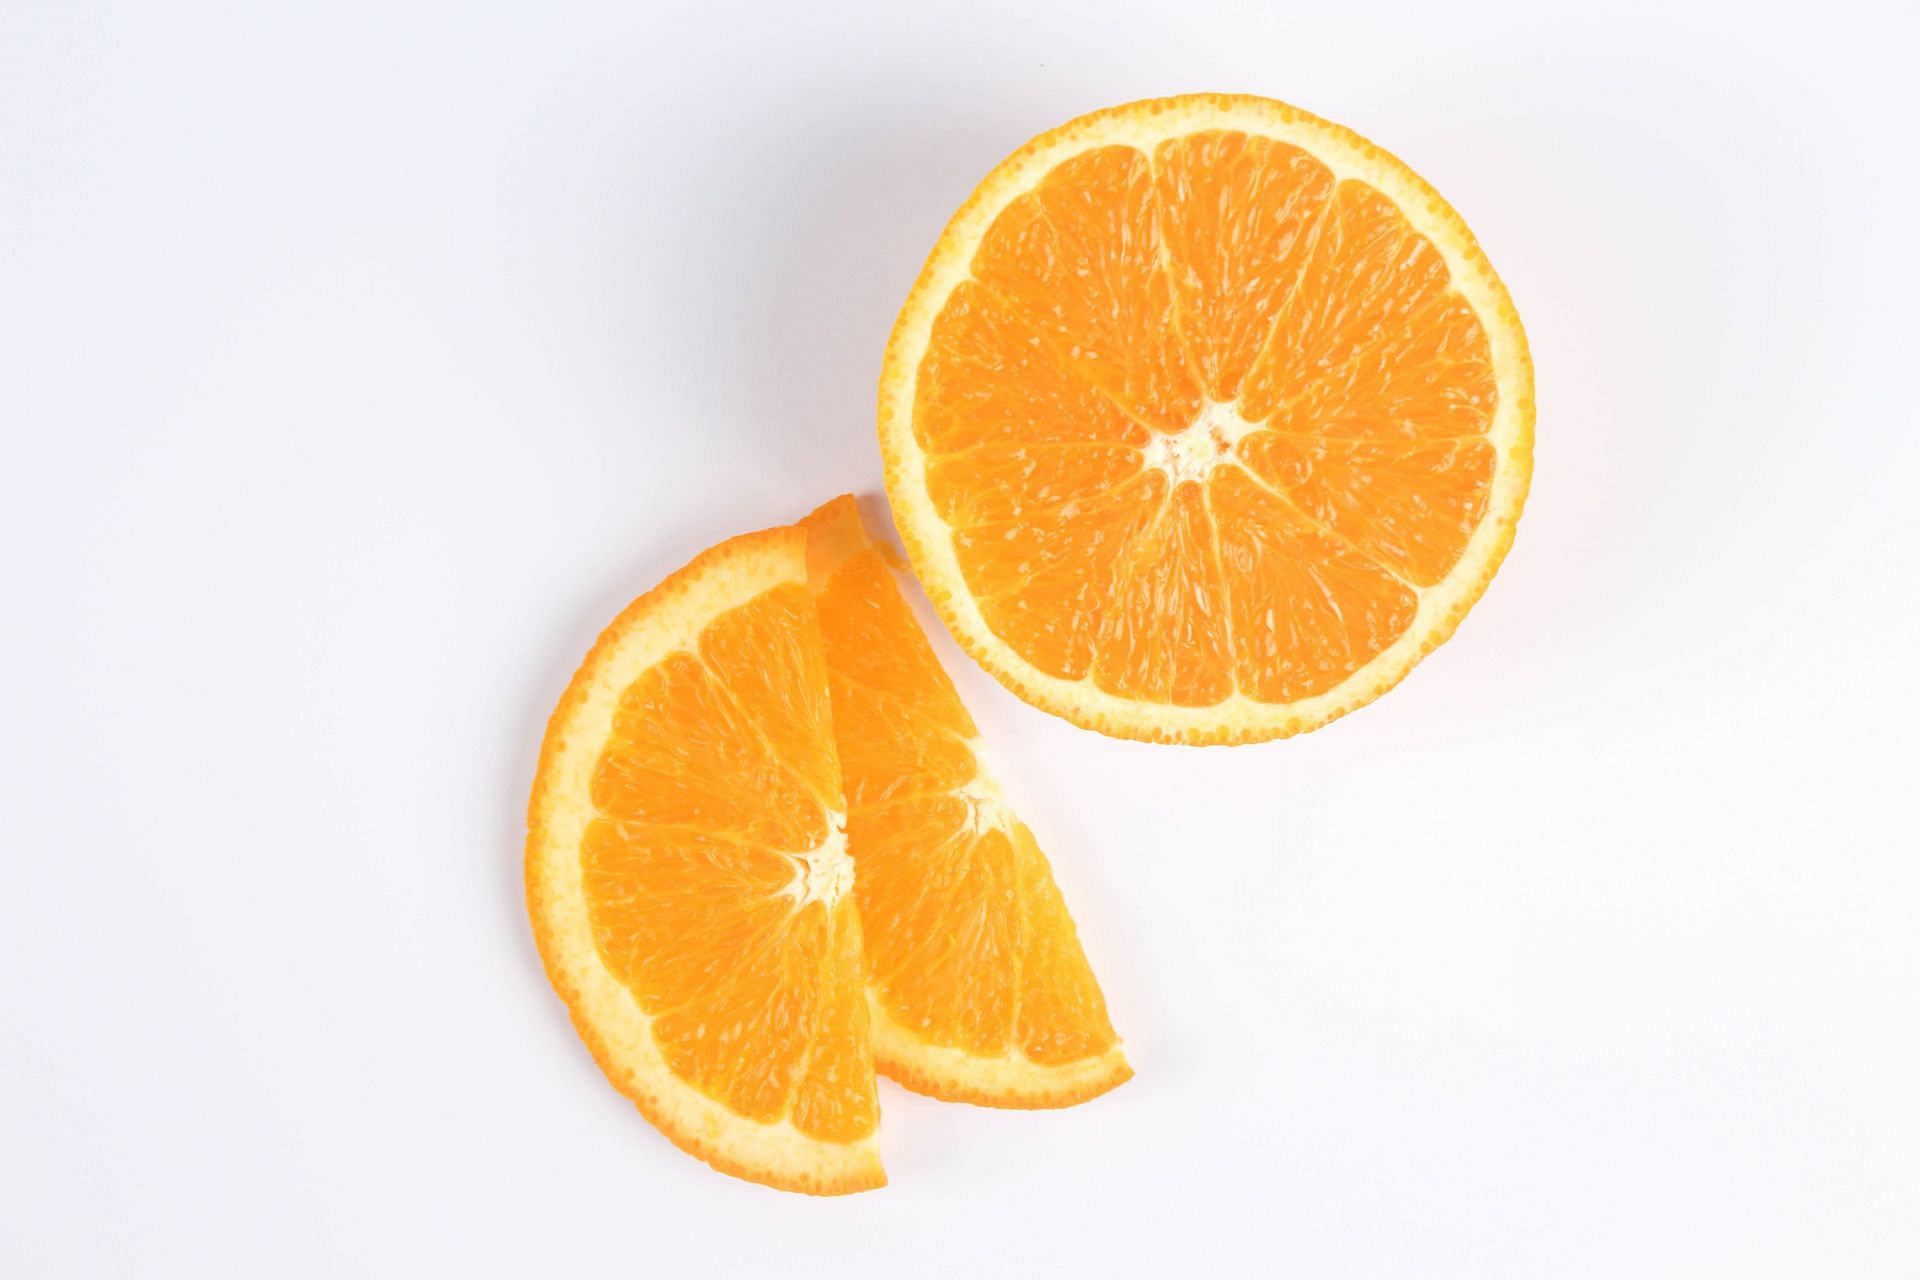 Citrus fruits can reduce nausea (Image via Unsplash/Chang Duong)